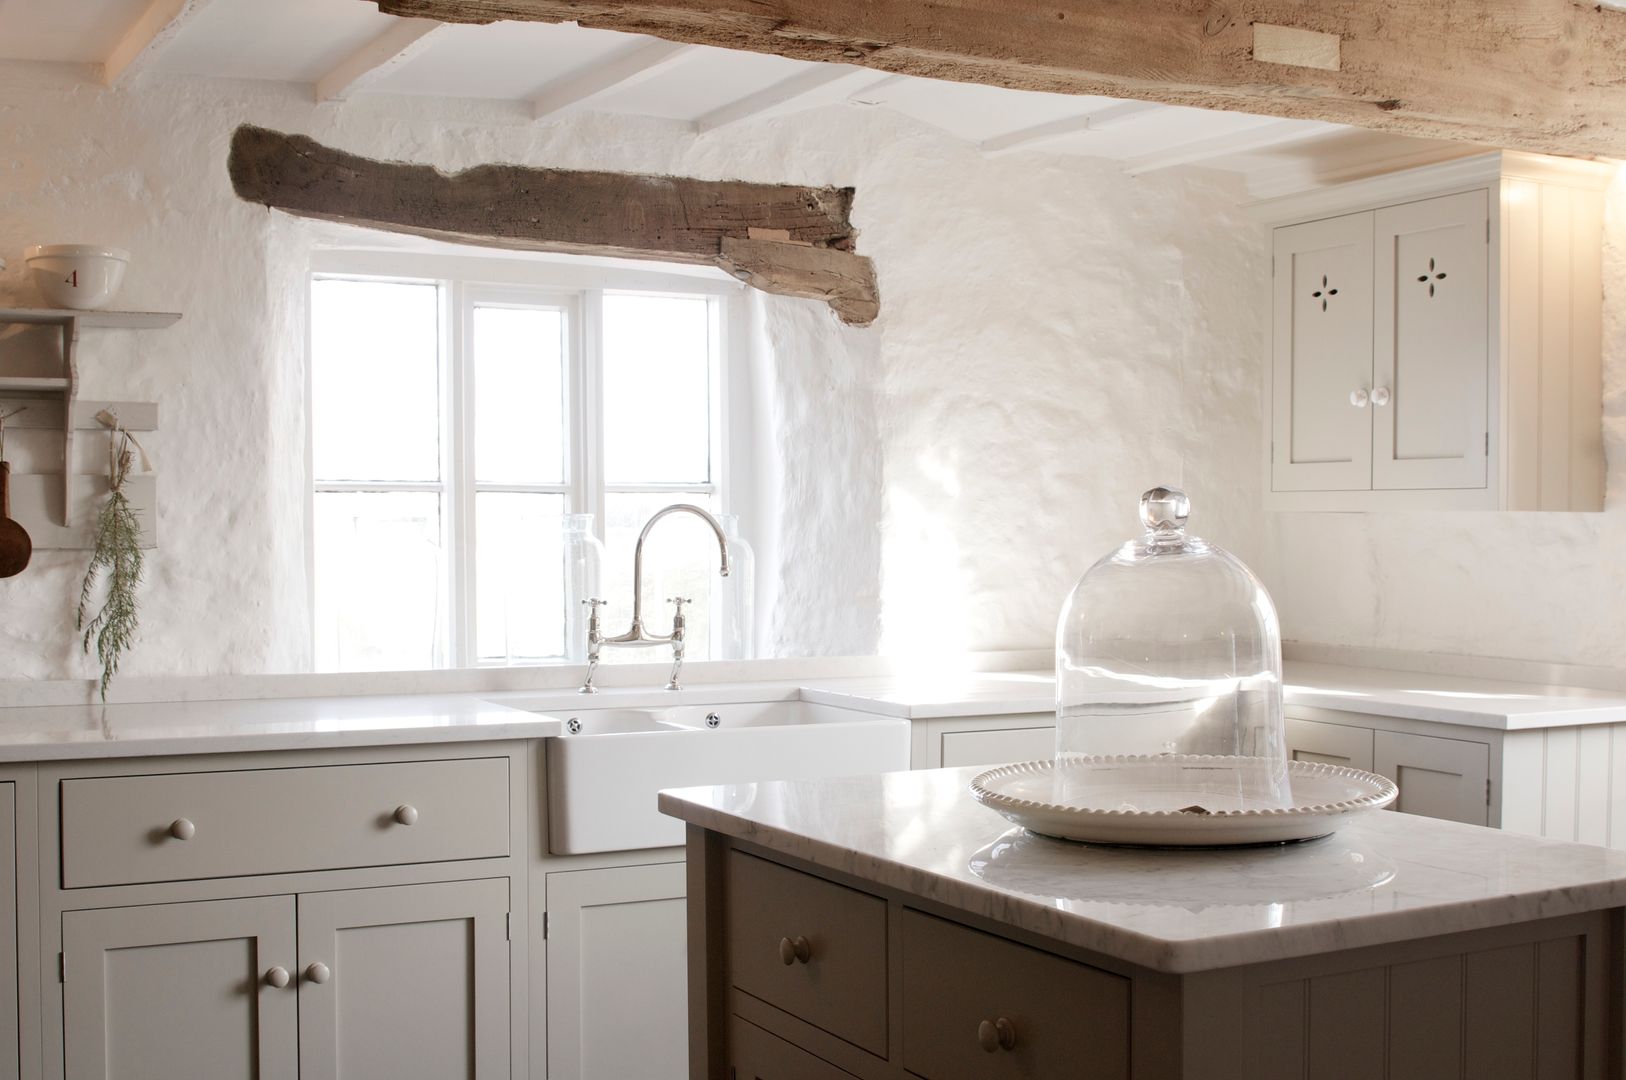 The Cotes Mill Shaker Kitchen deVOL Kitchens Rustic style kitchen